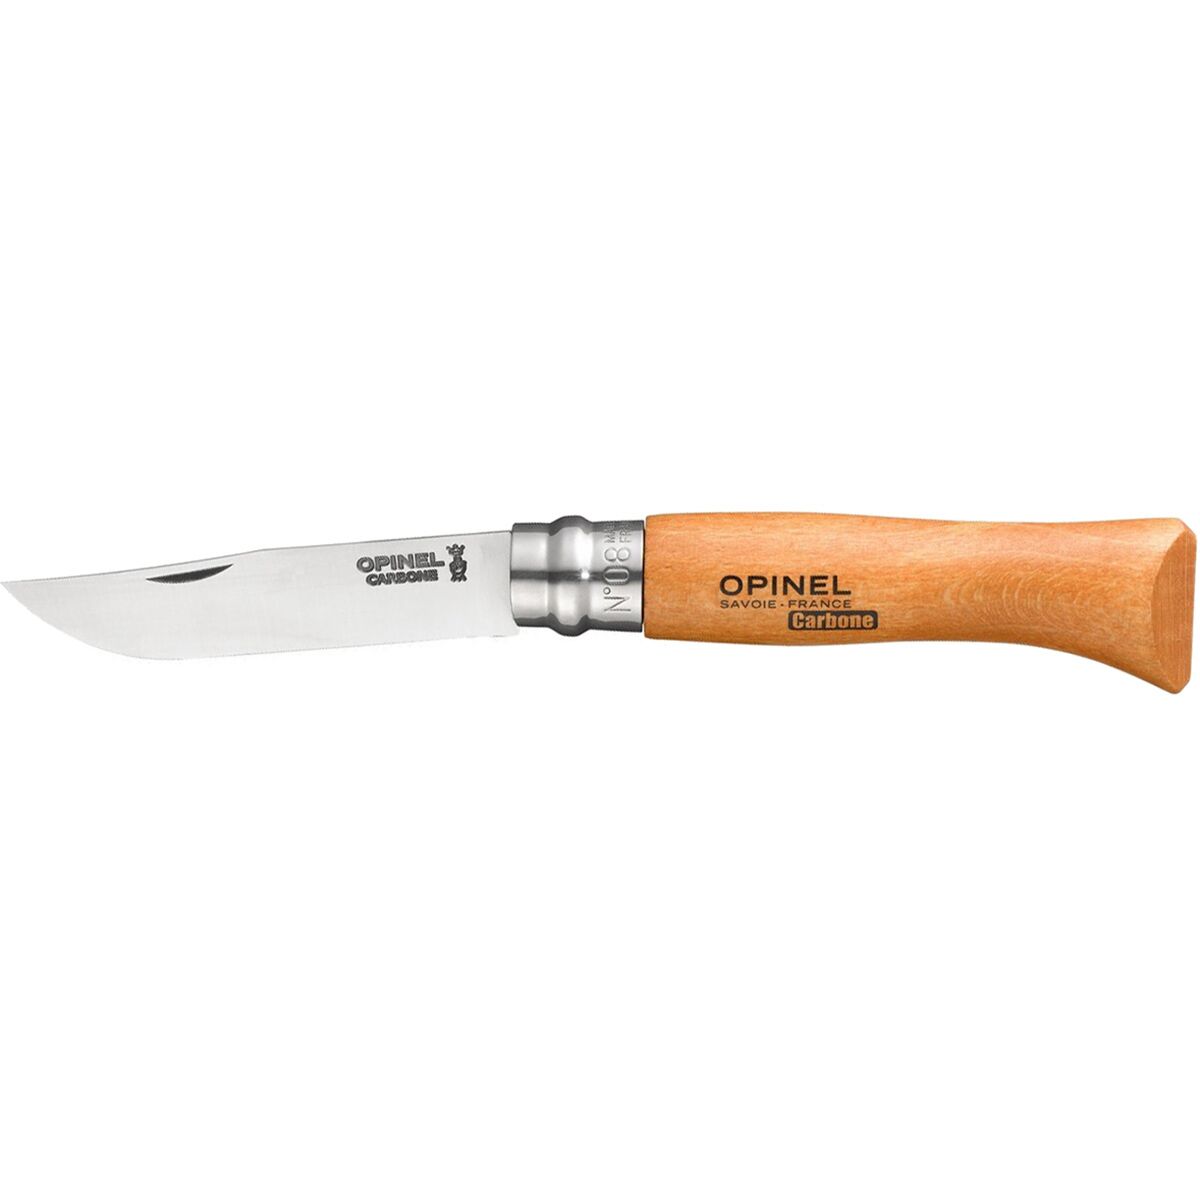 Opinel No 8 Carbon Steel Knife